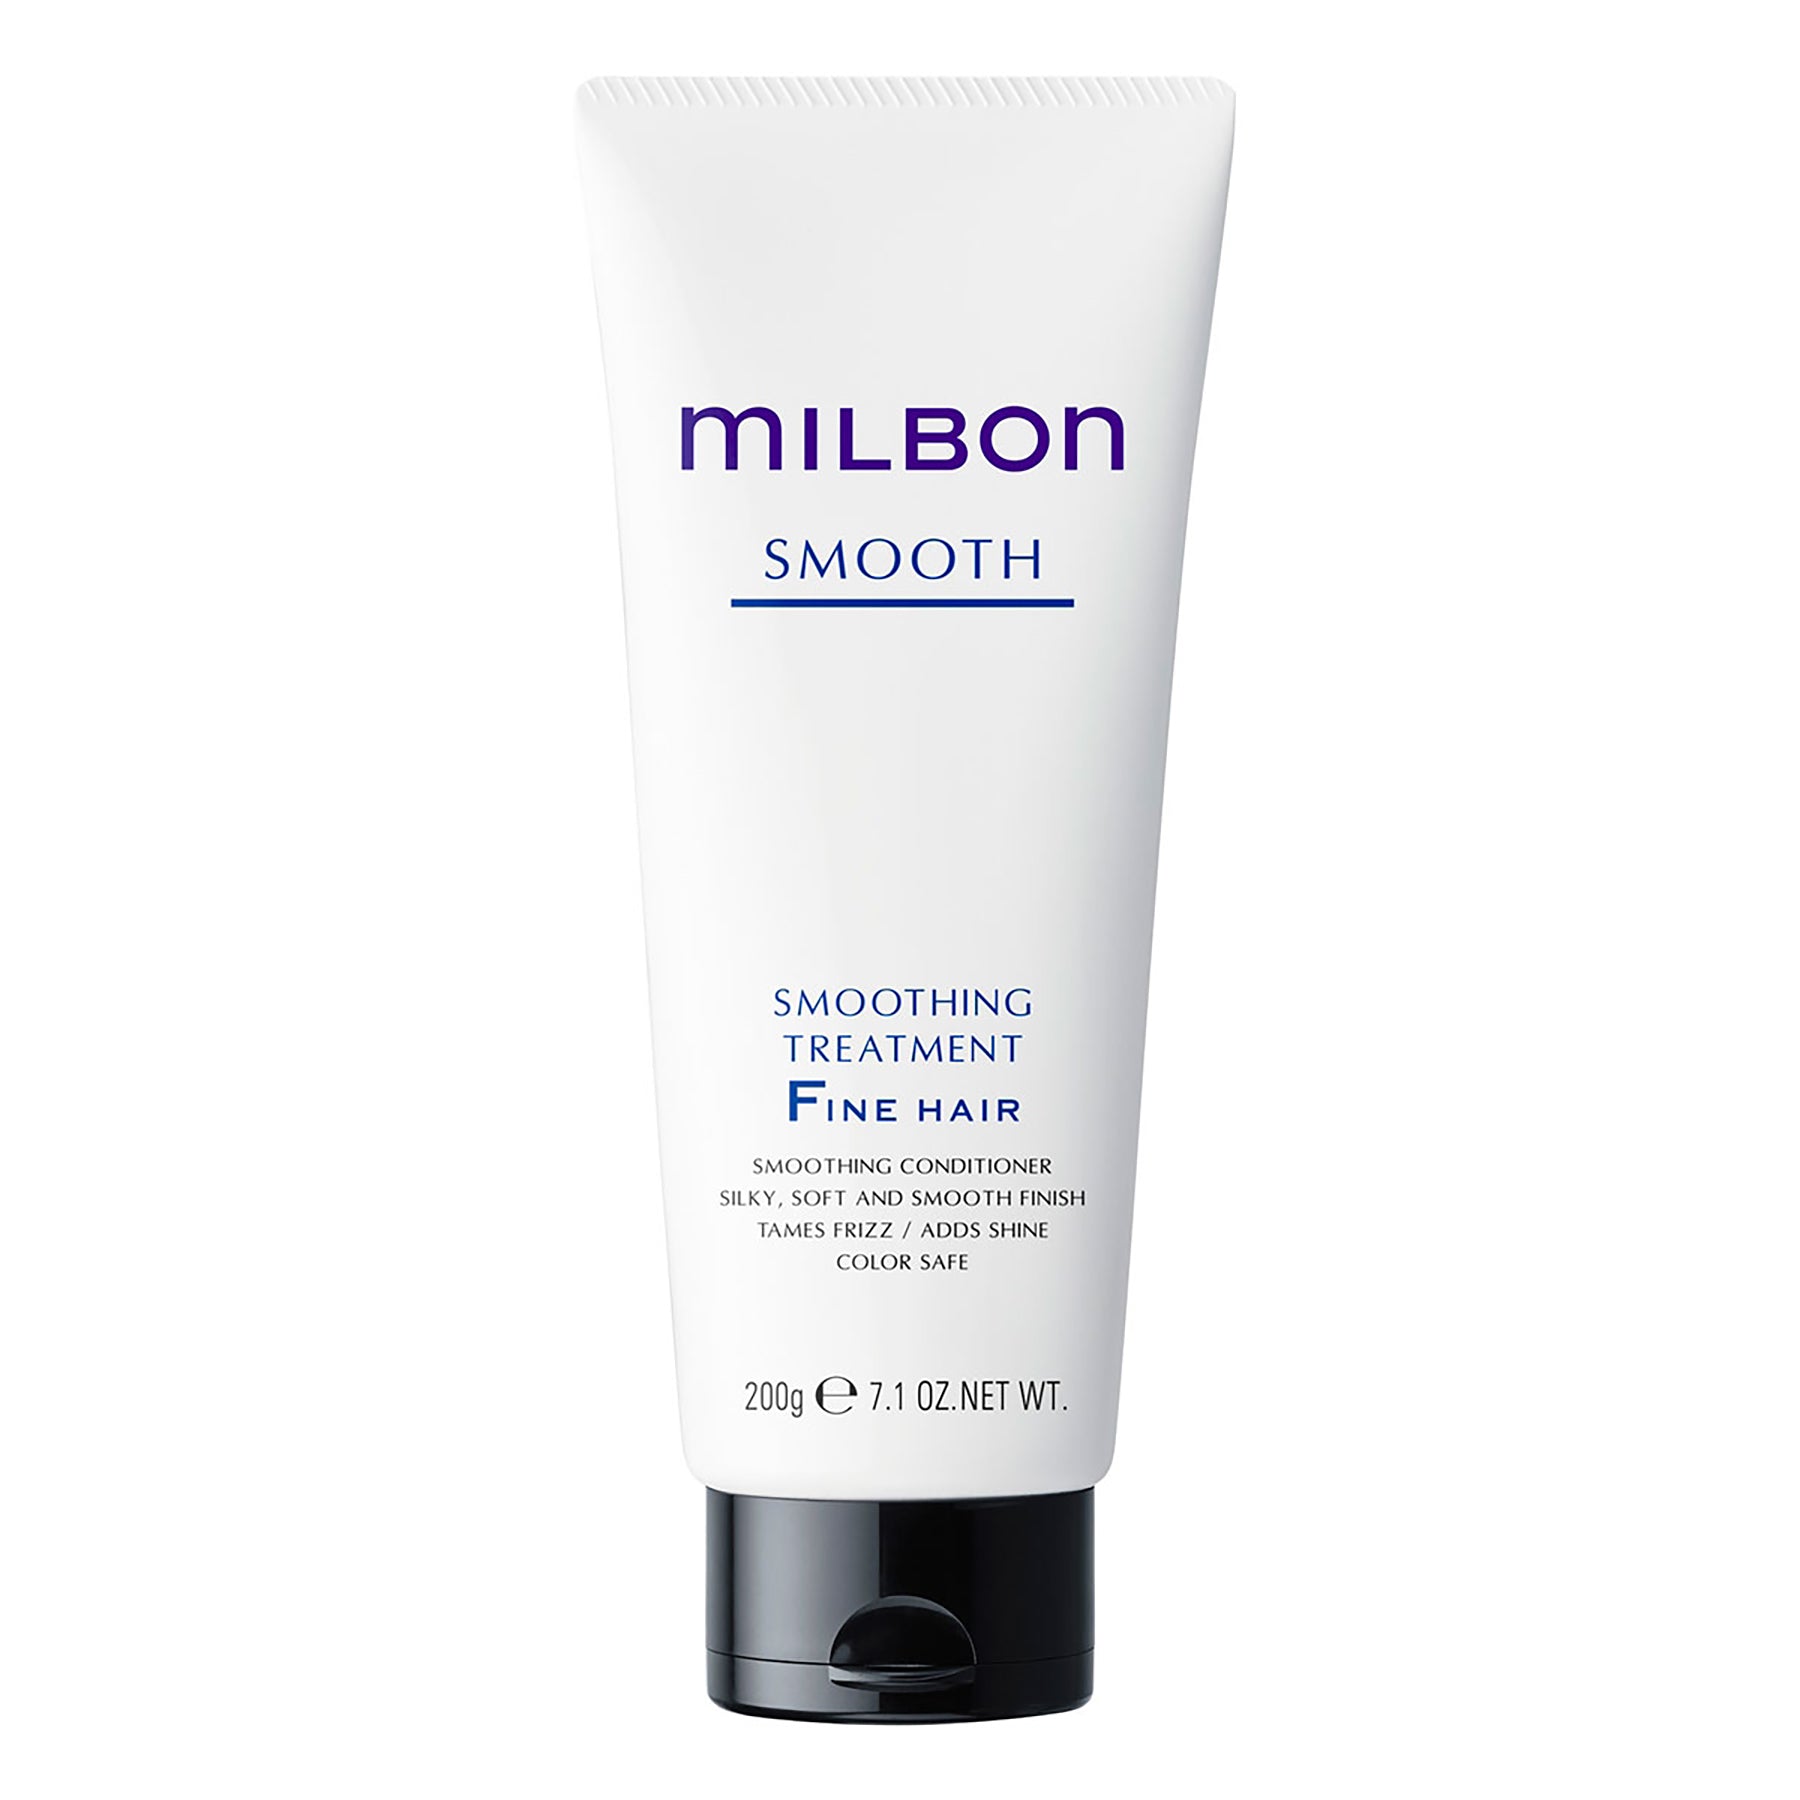 Milbon Smooth Smoothing Treatment Fine Hair